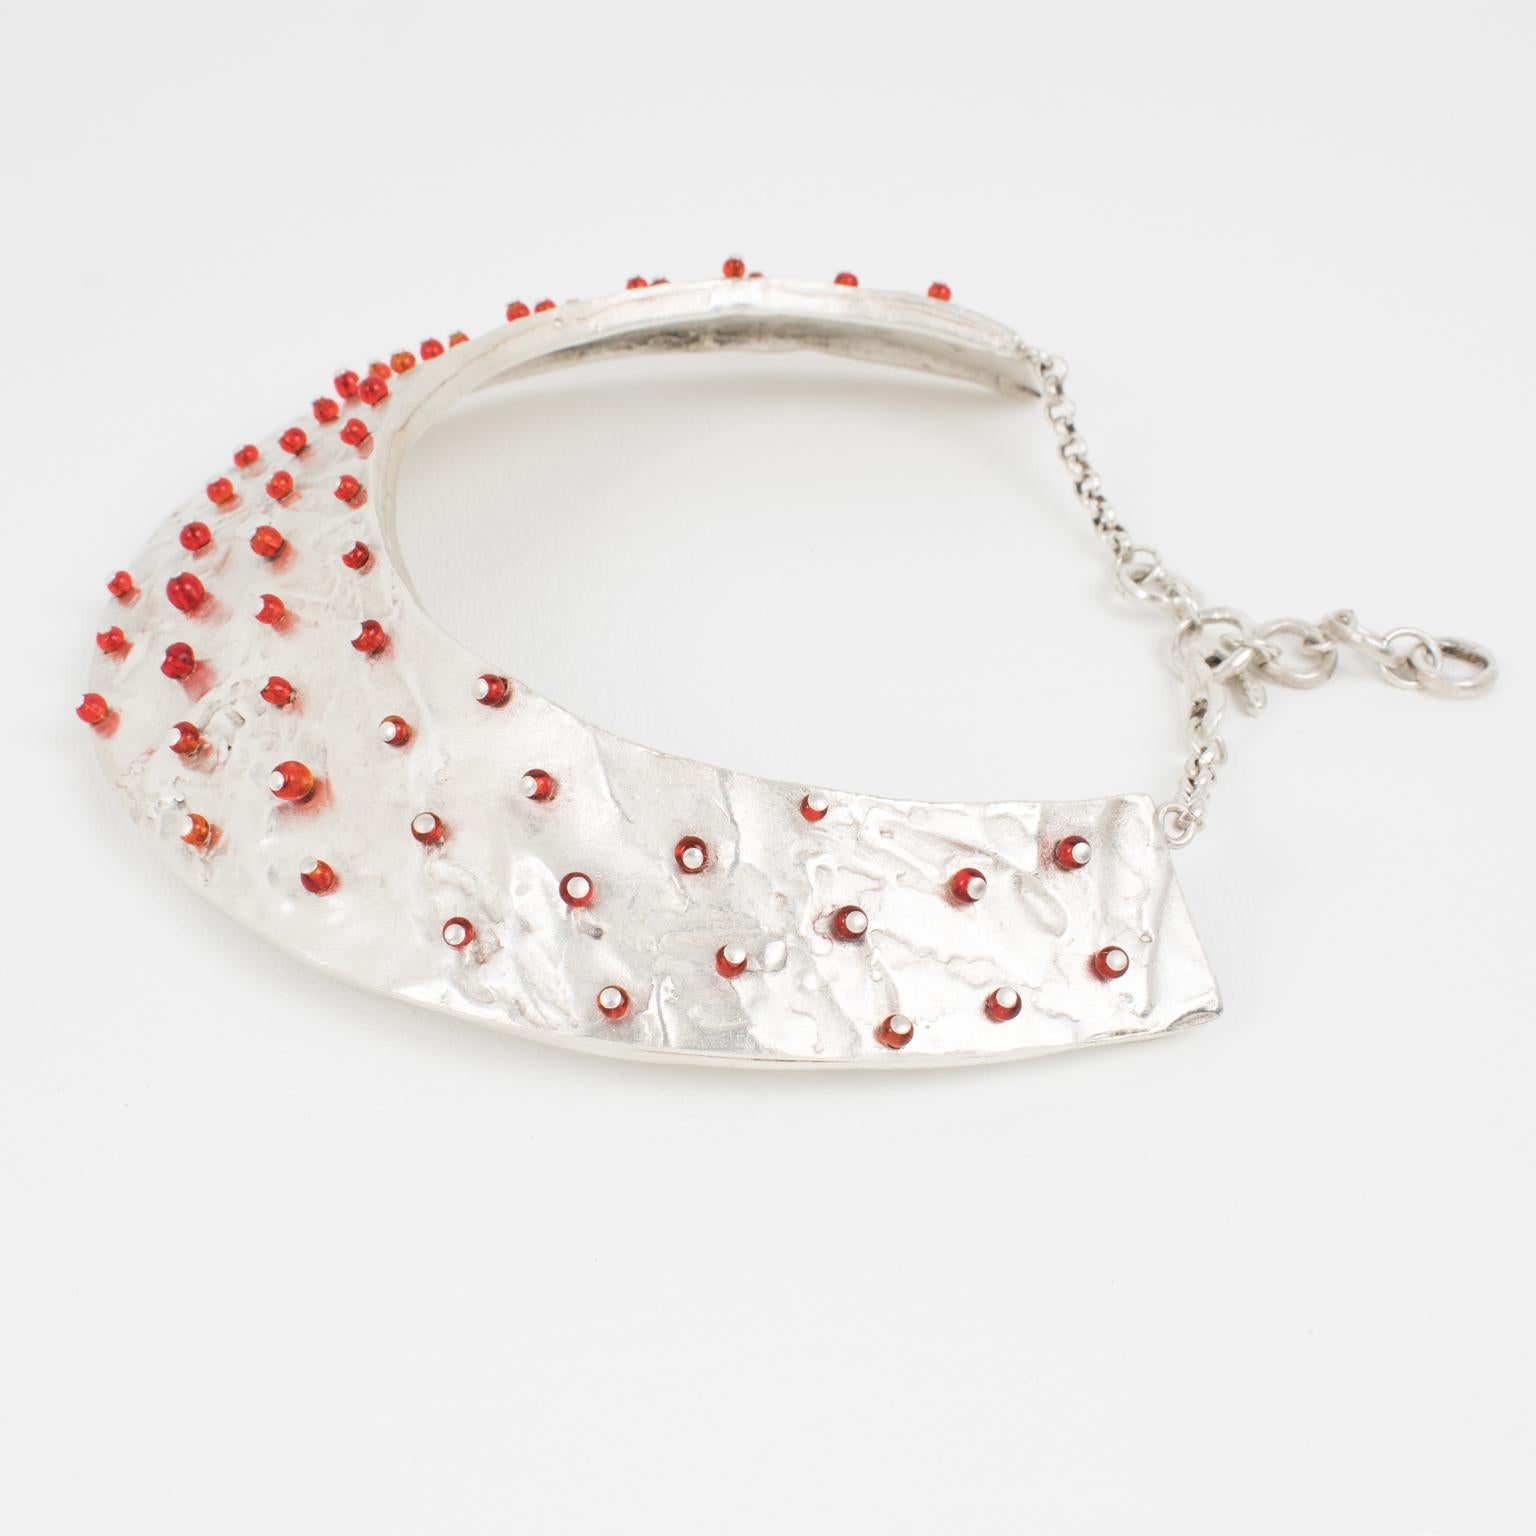 Modernist Biche de Bere Paris Brutalist Silver Plate Rigid Collar Necklace with Red Beads For Sale